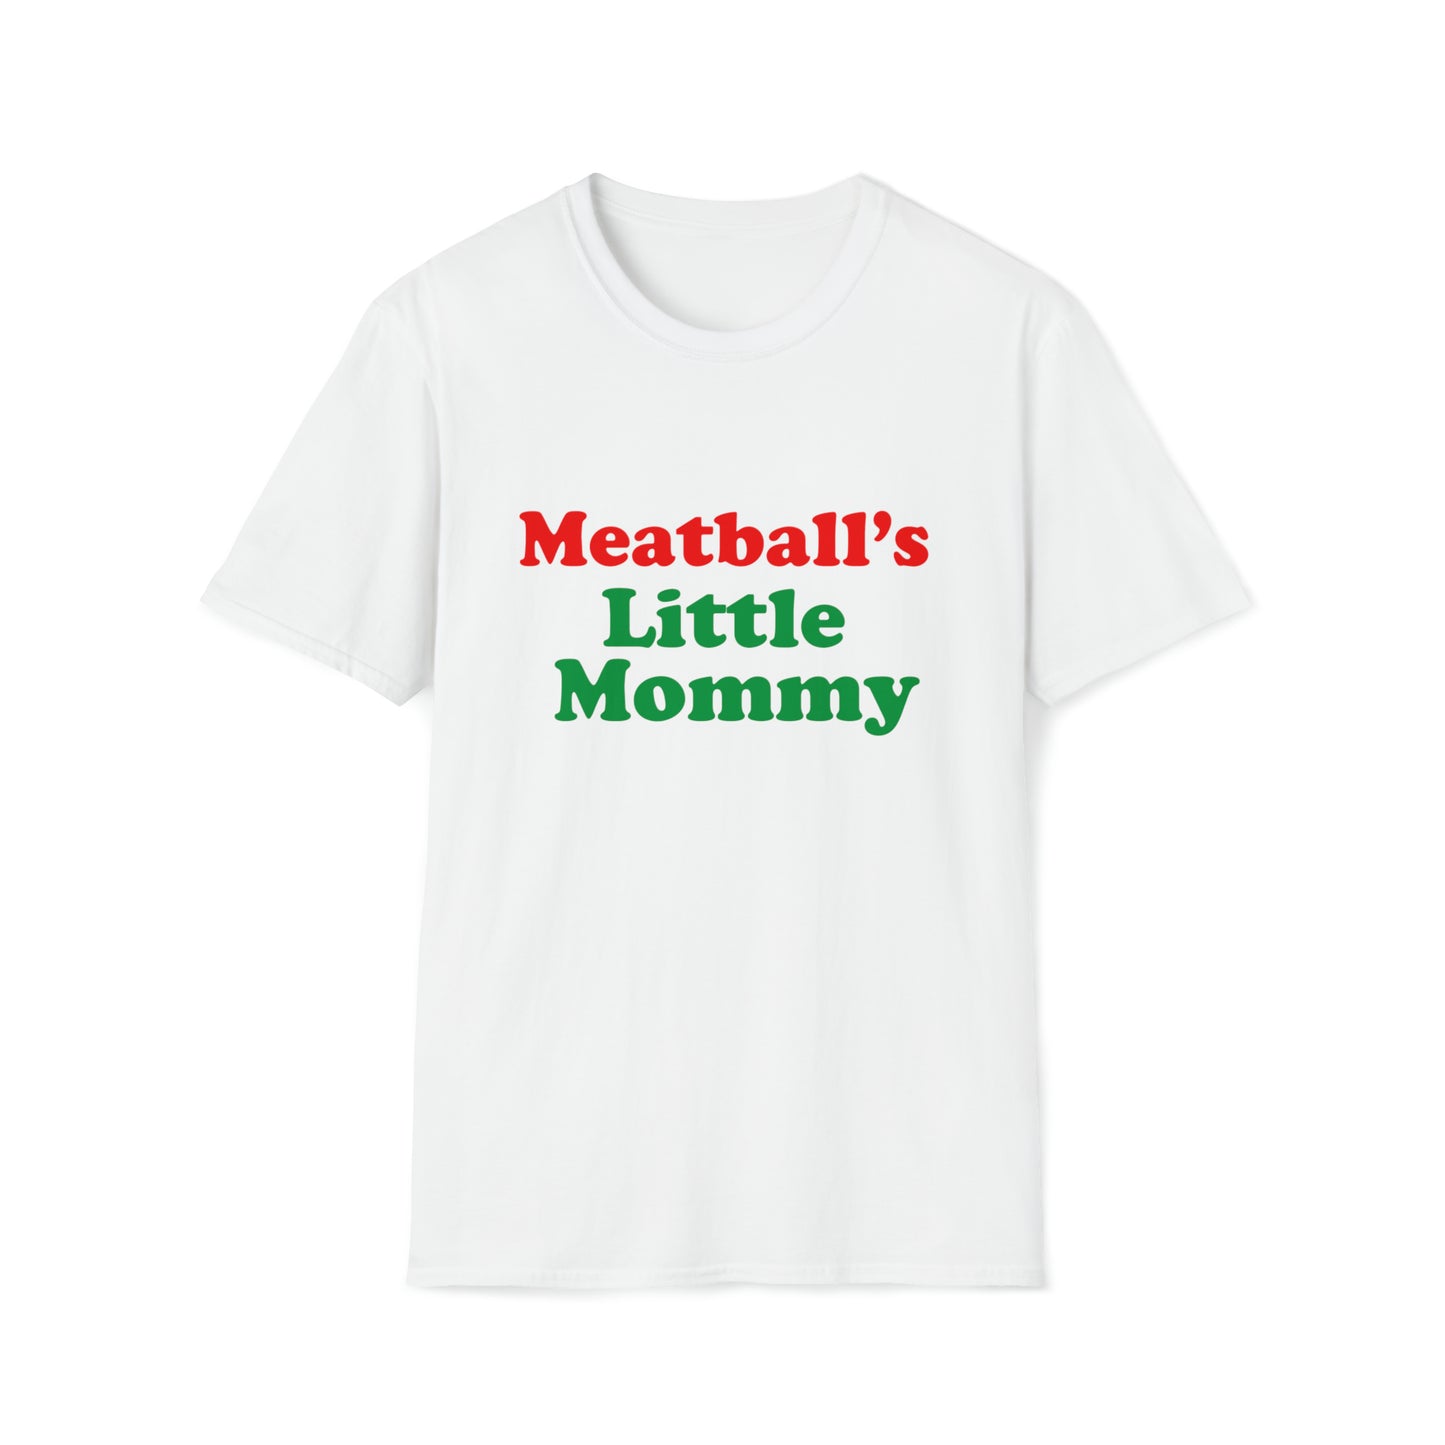 Meatball's Little Mommy